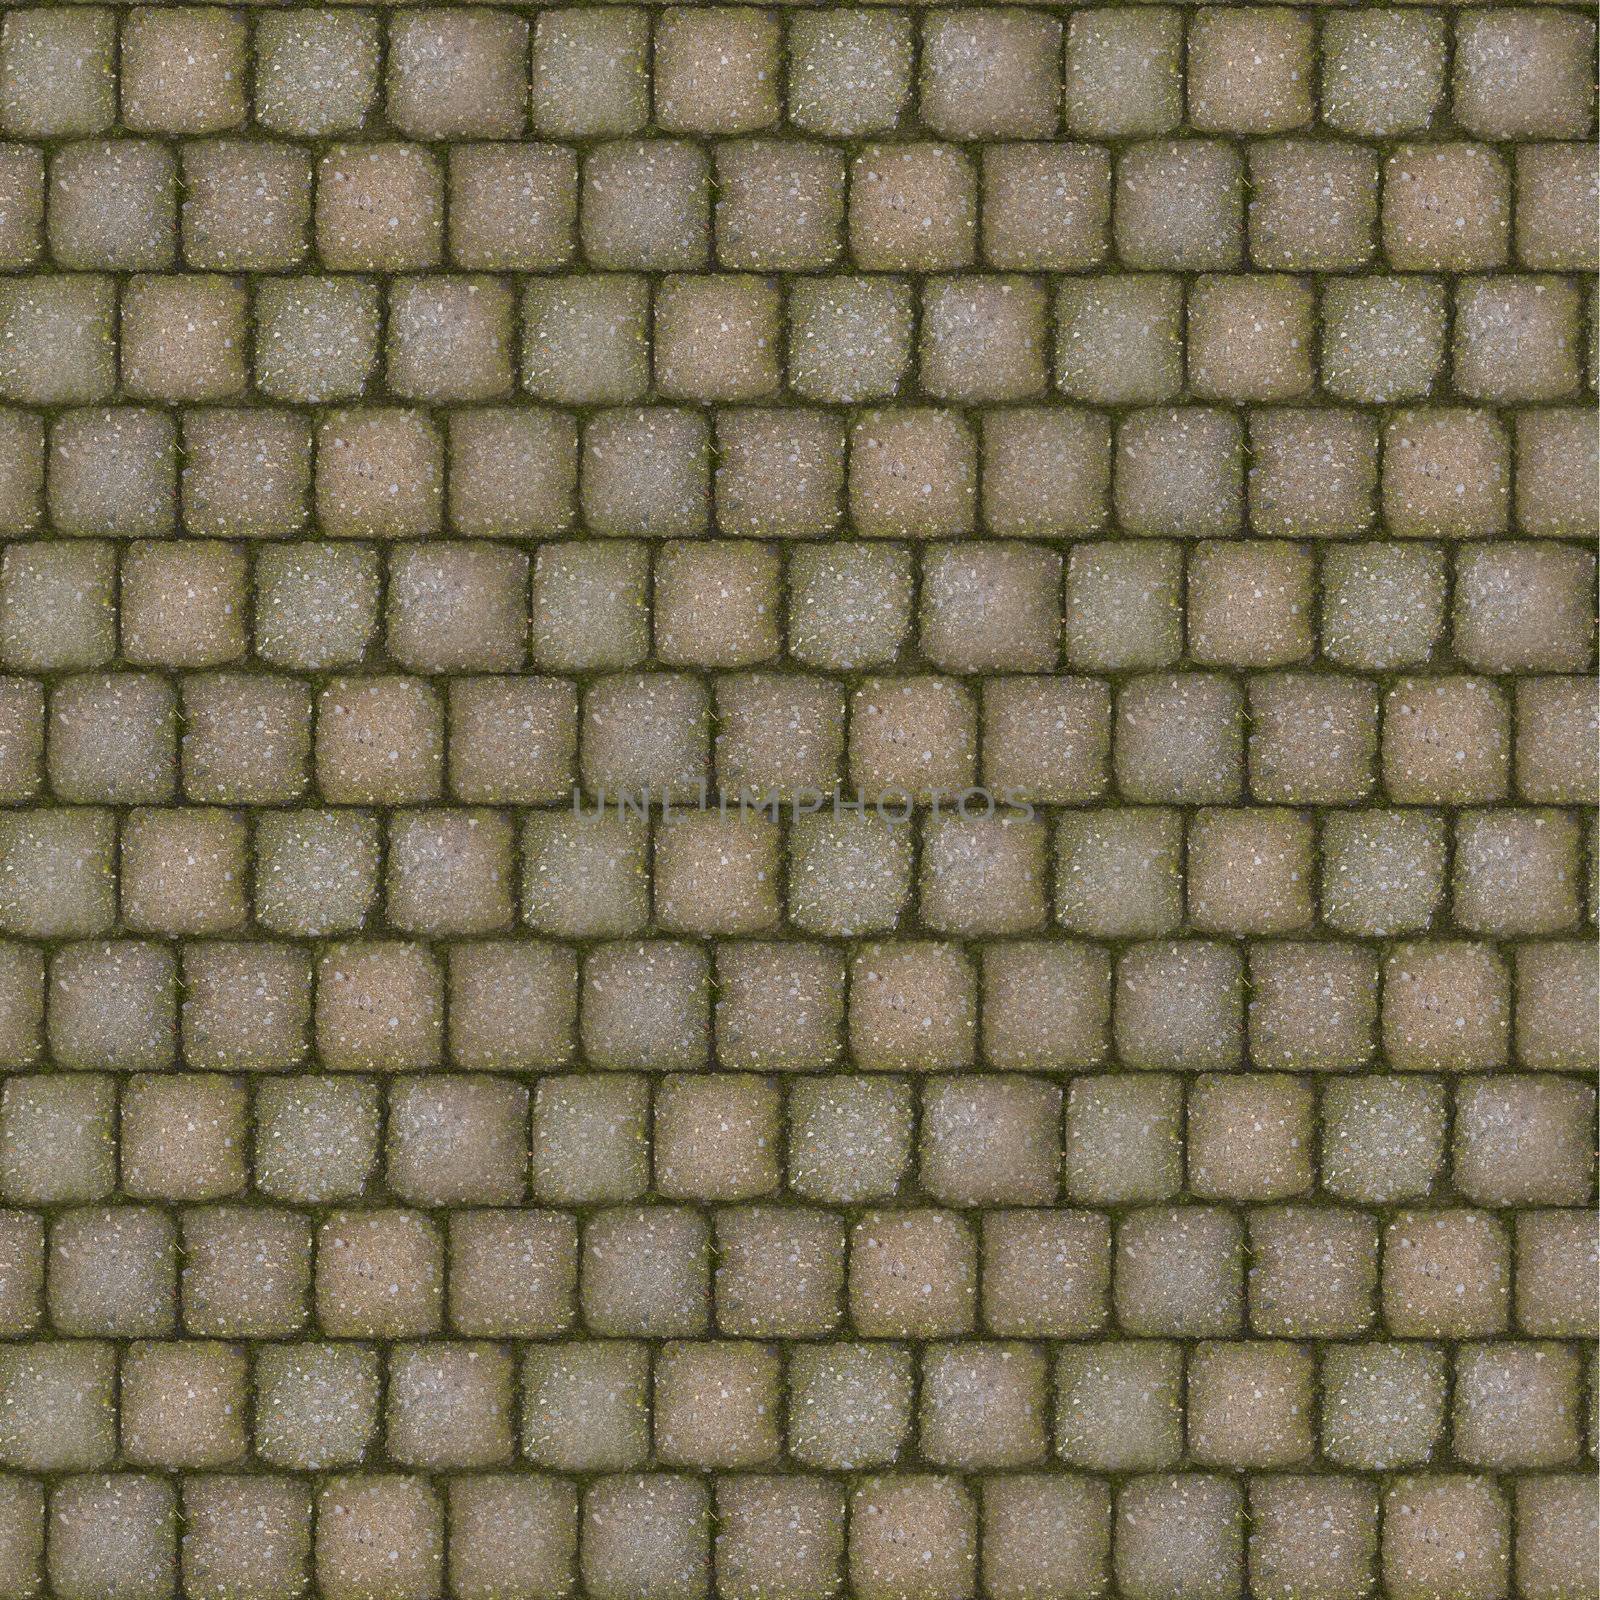 Tiling stone sidewalk texture with moss growing between bricks.